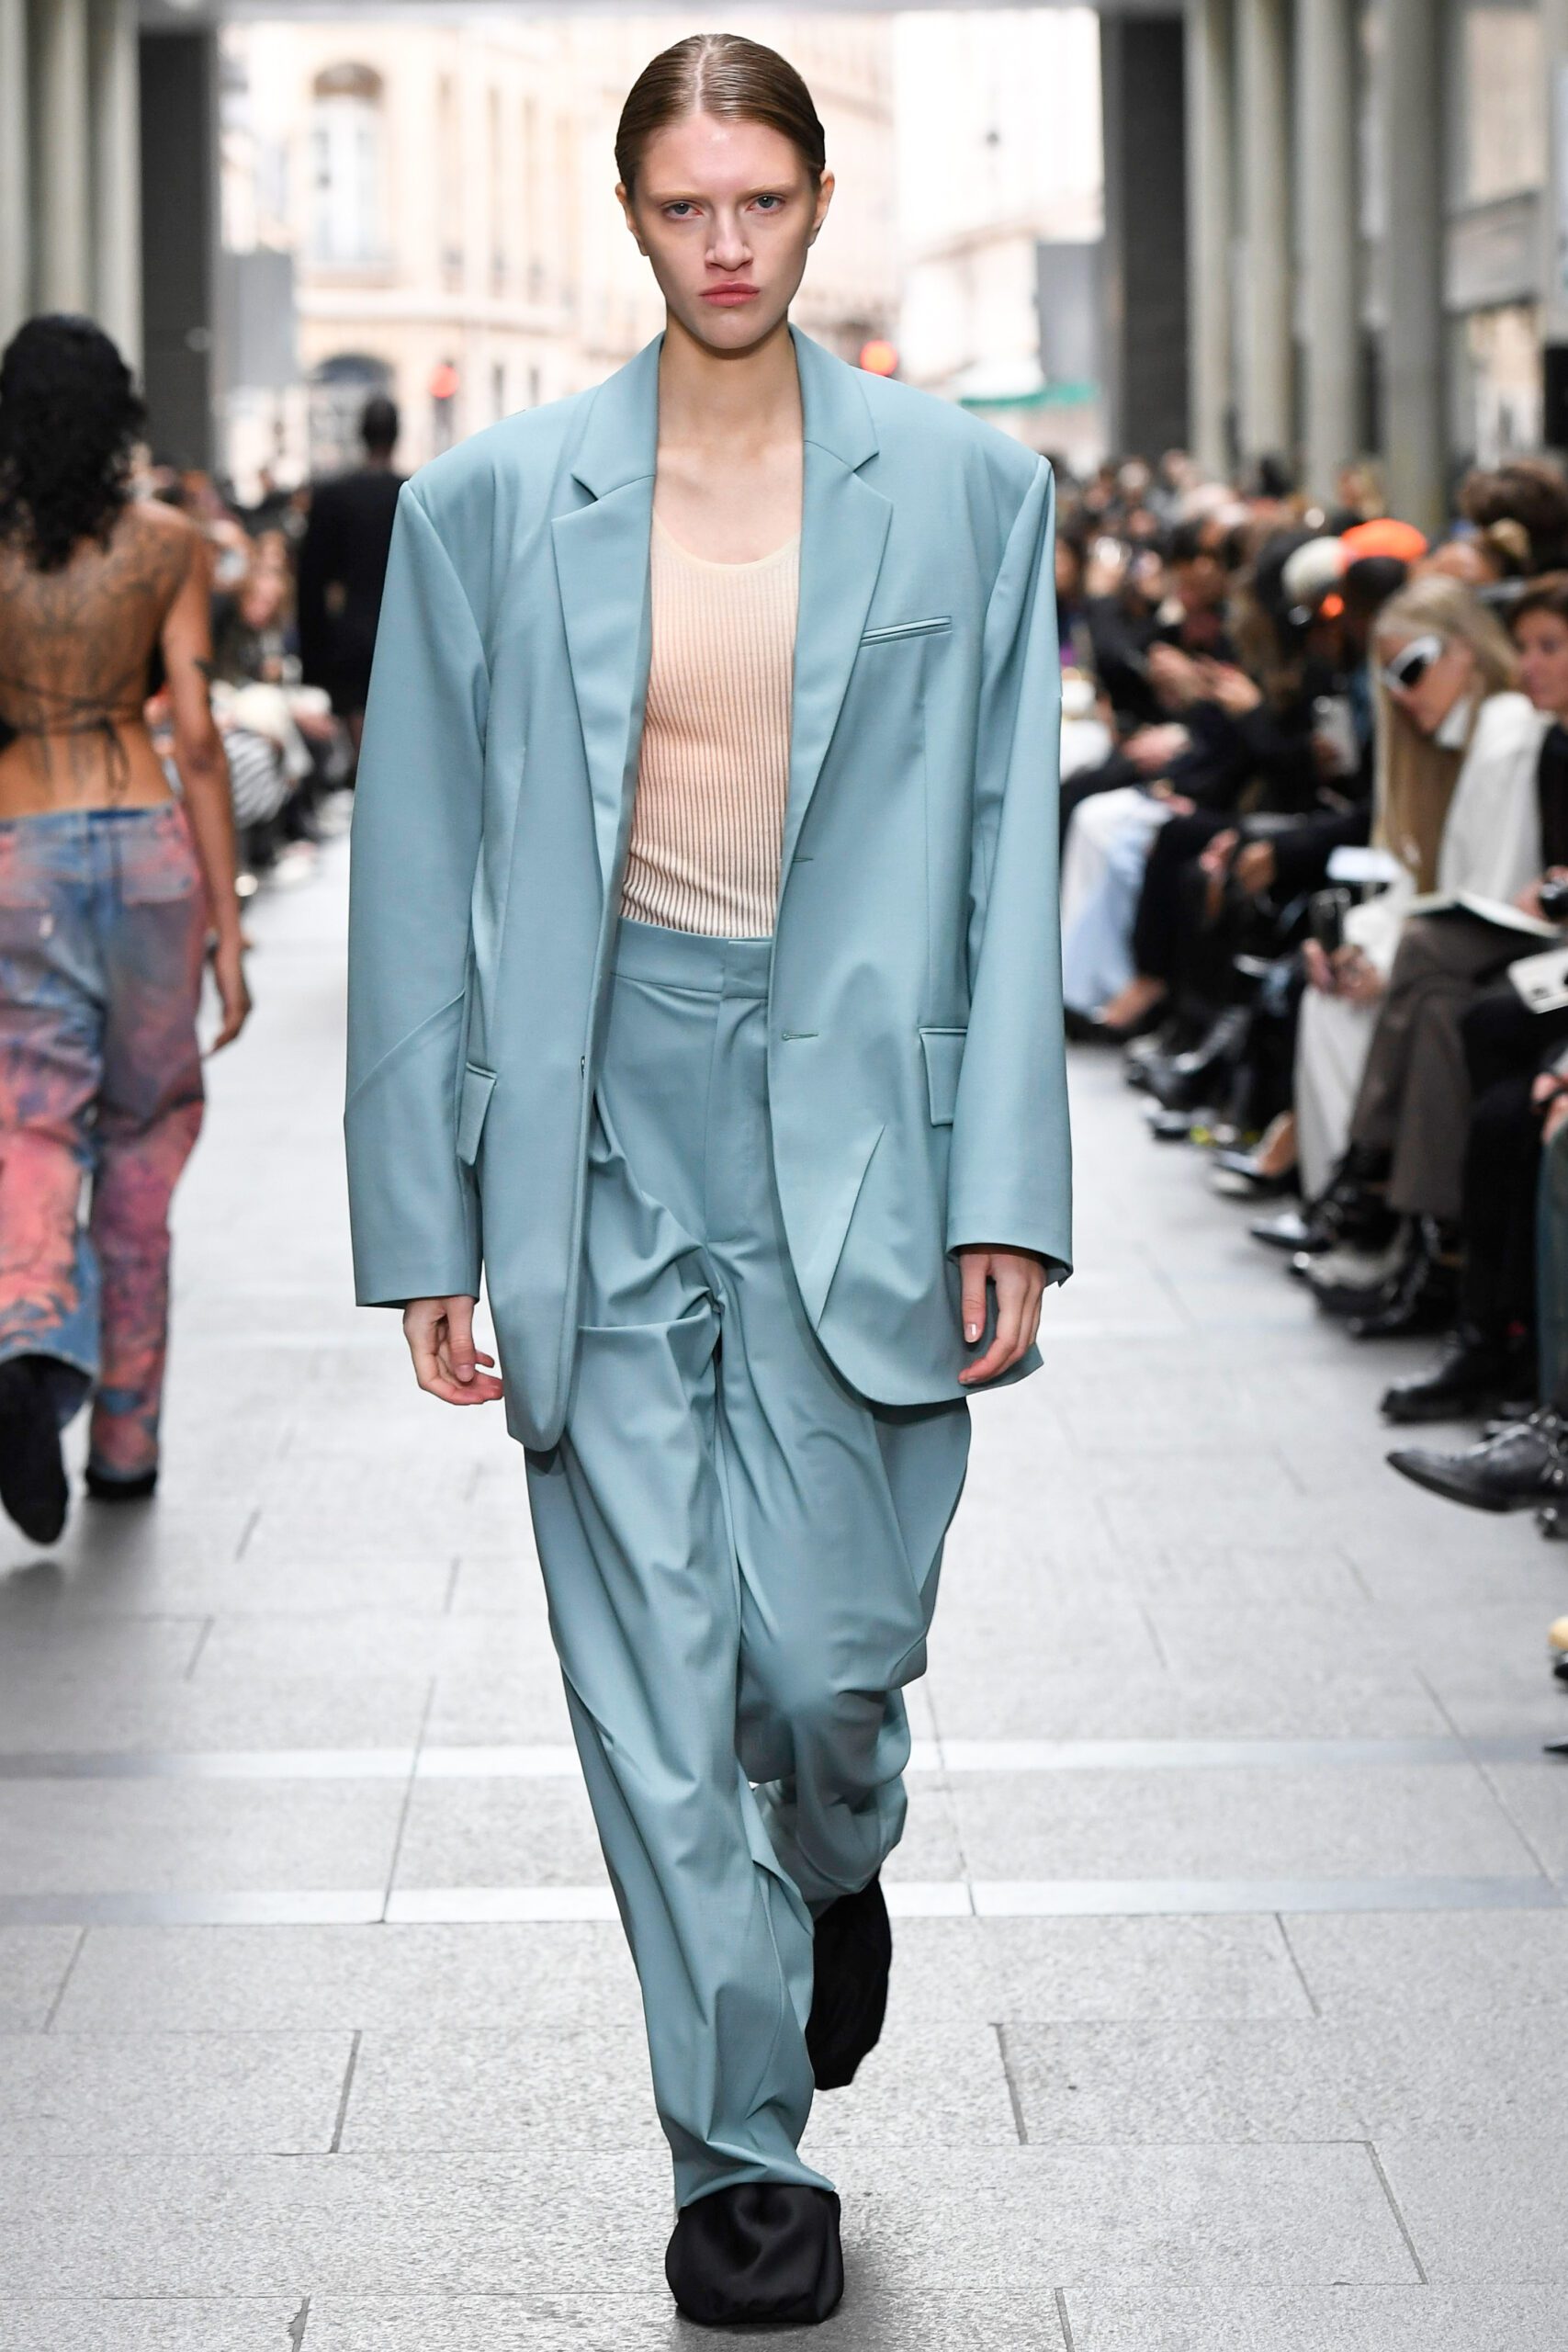 Paris Menswear Spring/Summer 2023 Fashion Week - The Garnette Report